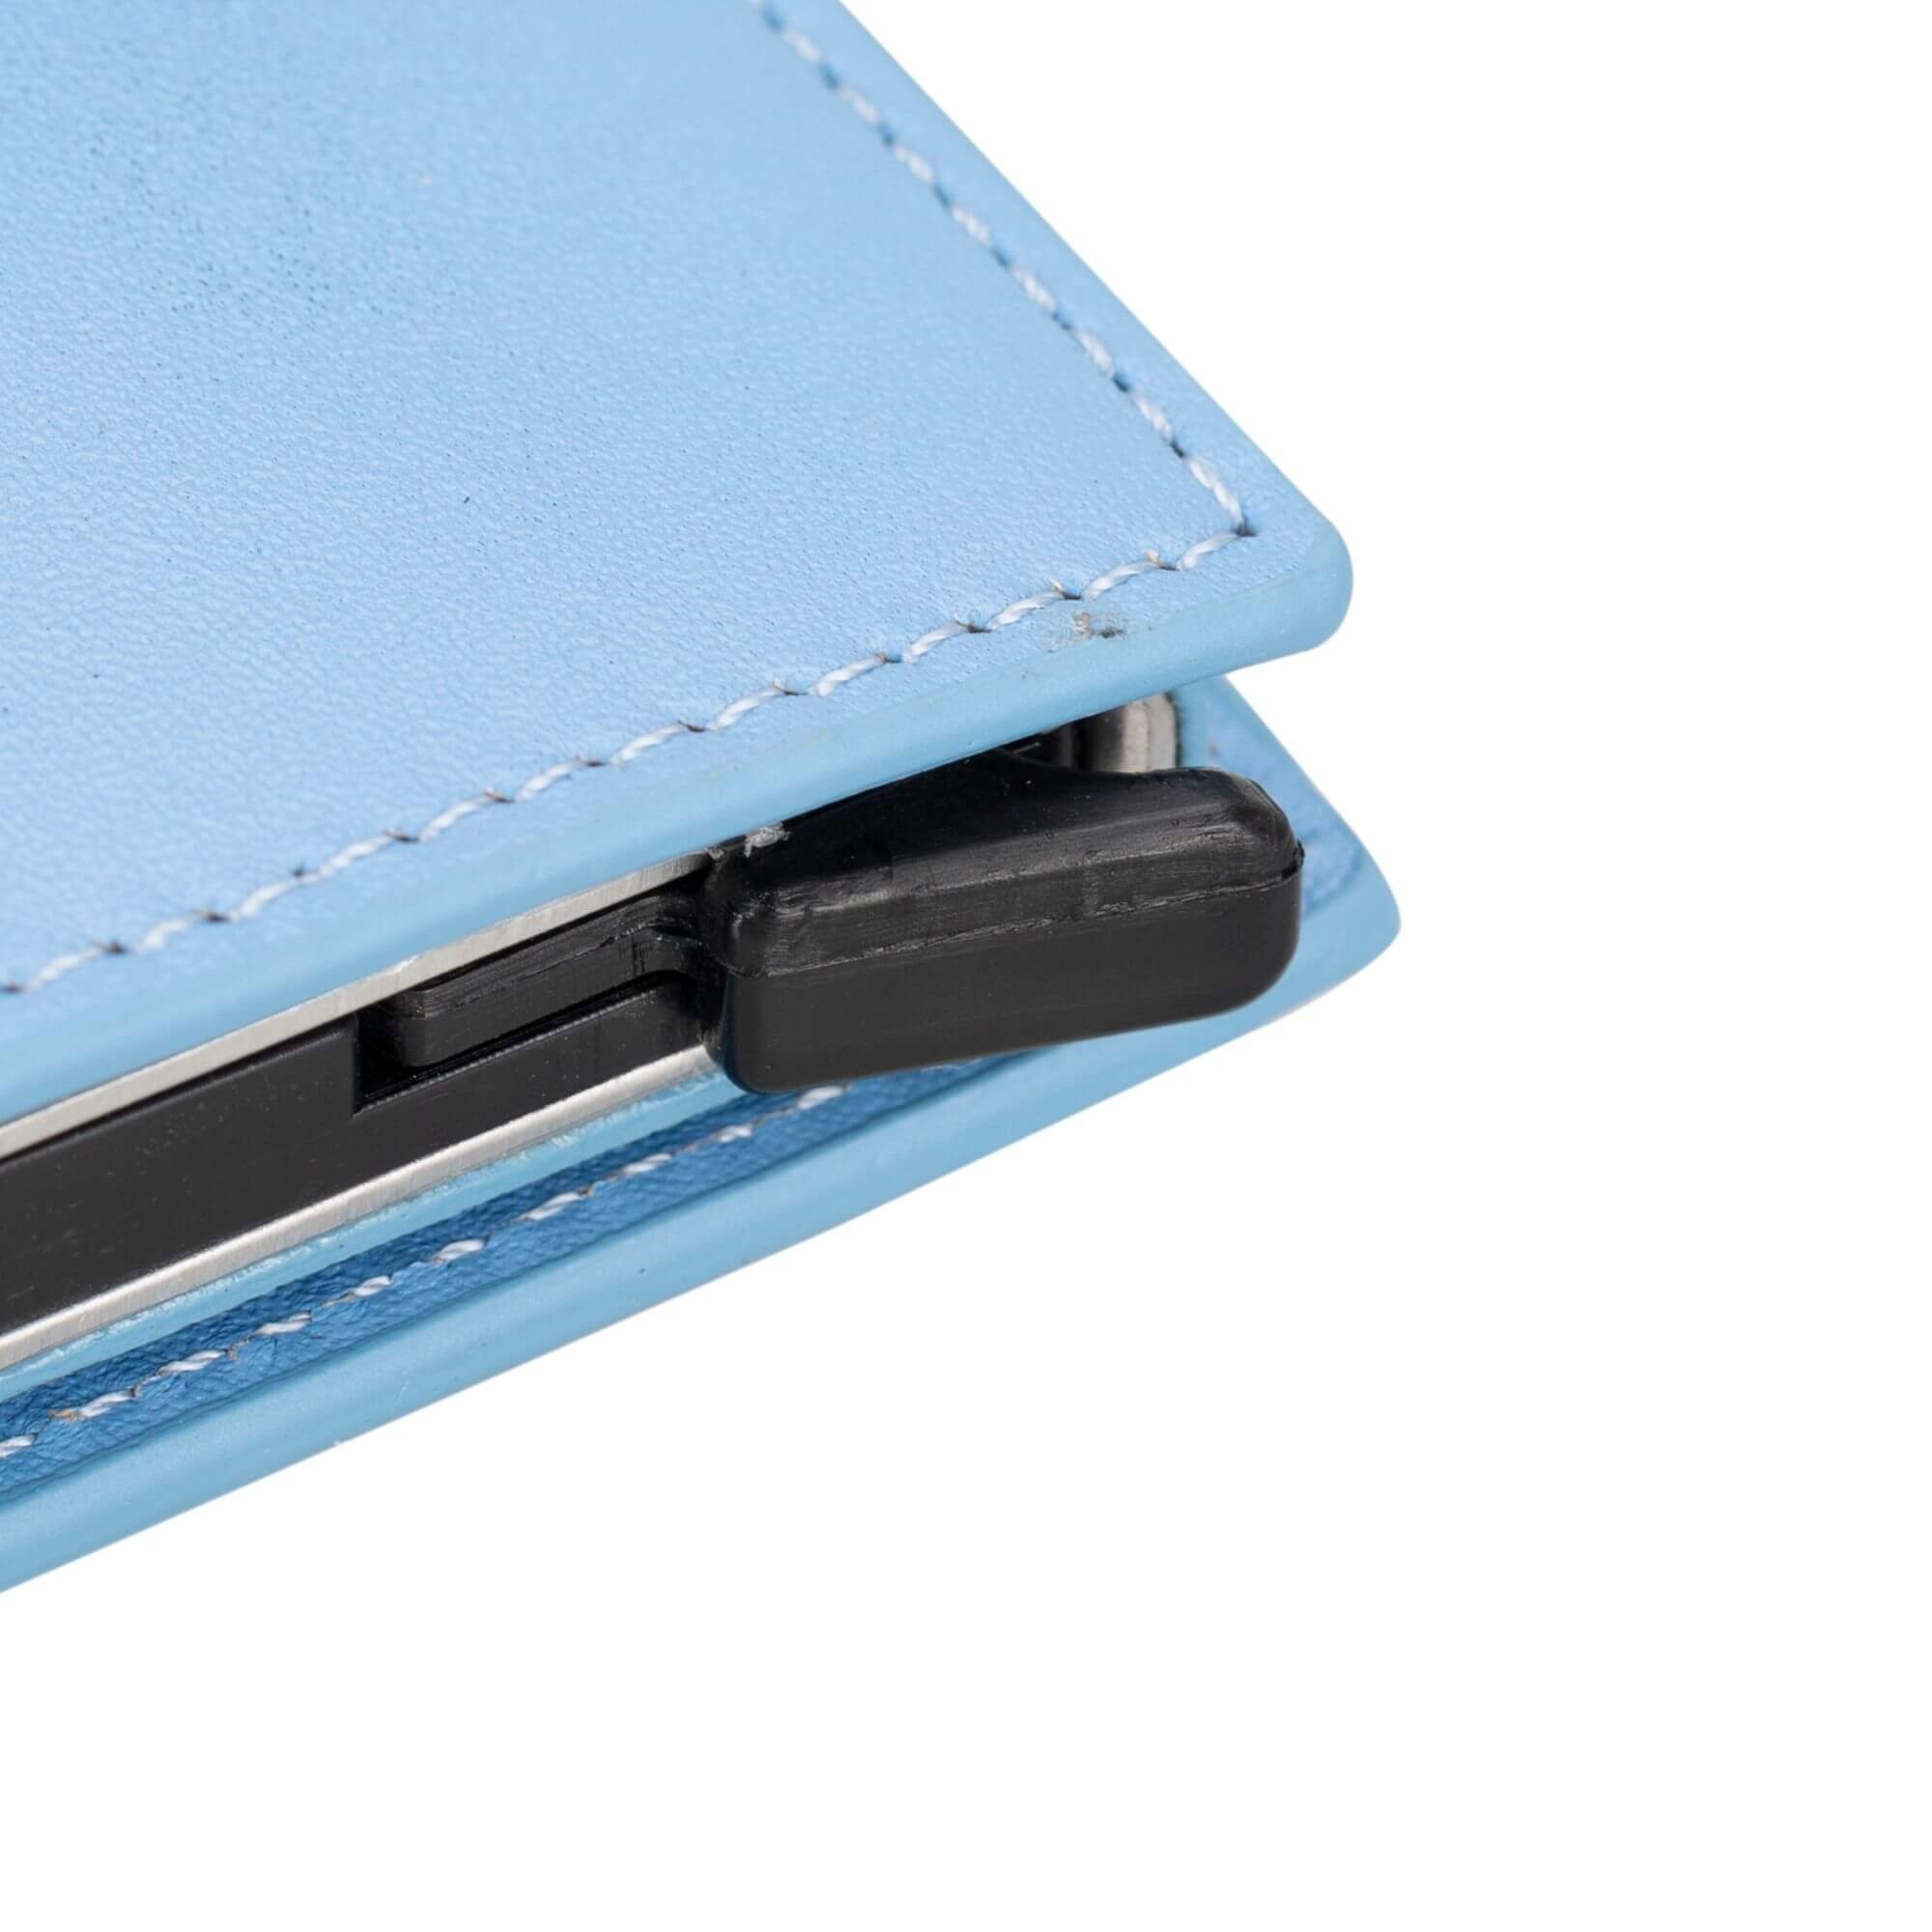 Douglas Leather Pop-Up Cardholder with Compatible Apple AirTag - Light Blue - TORONATA